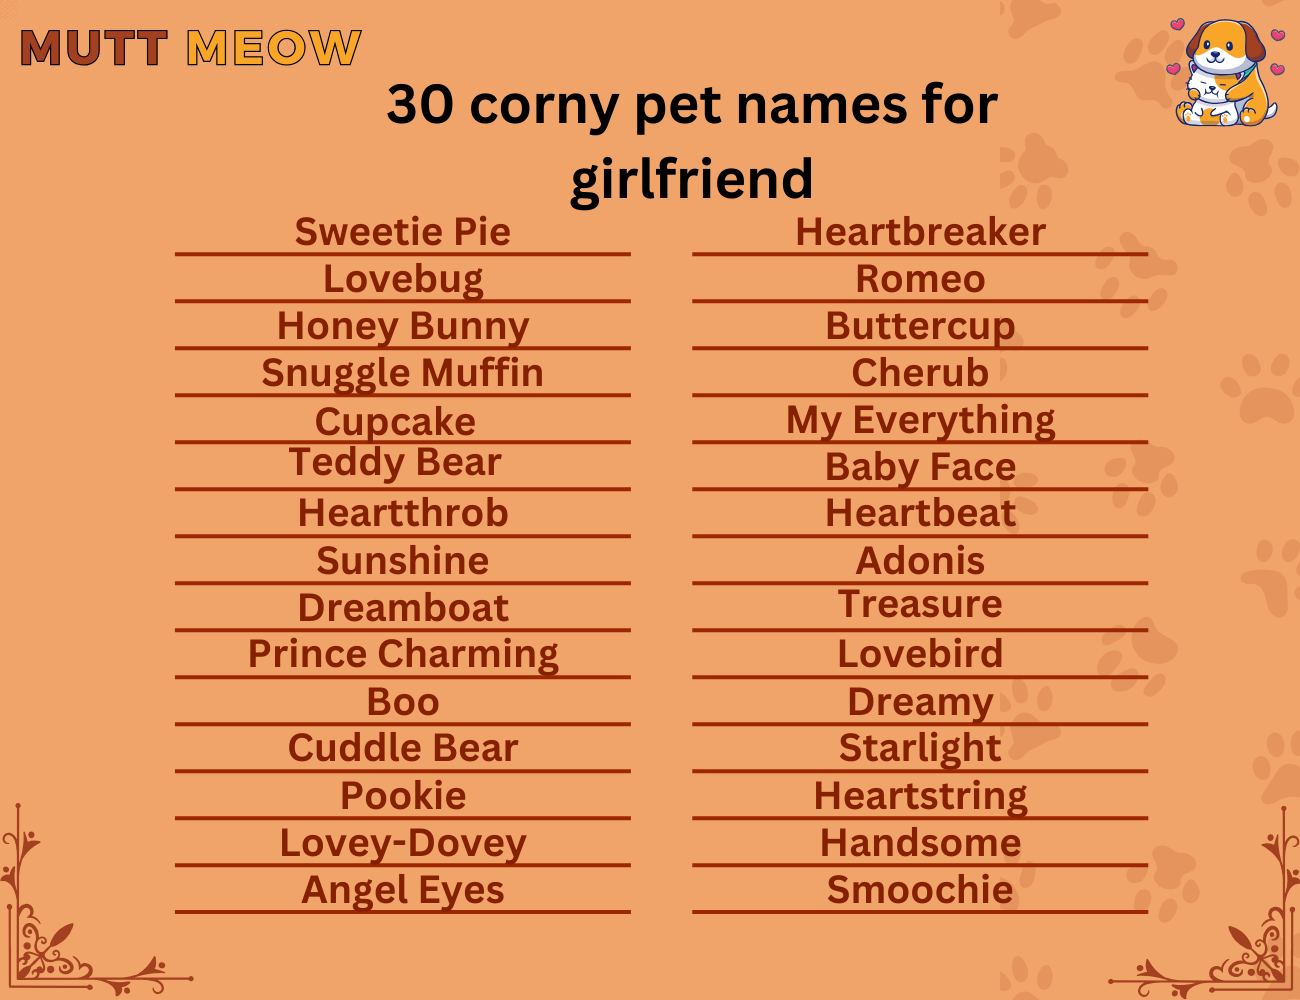 30 corny pet names for girlfriend